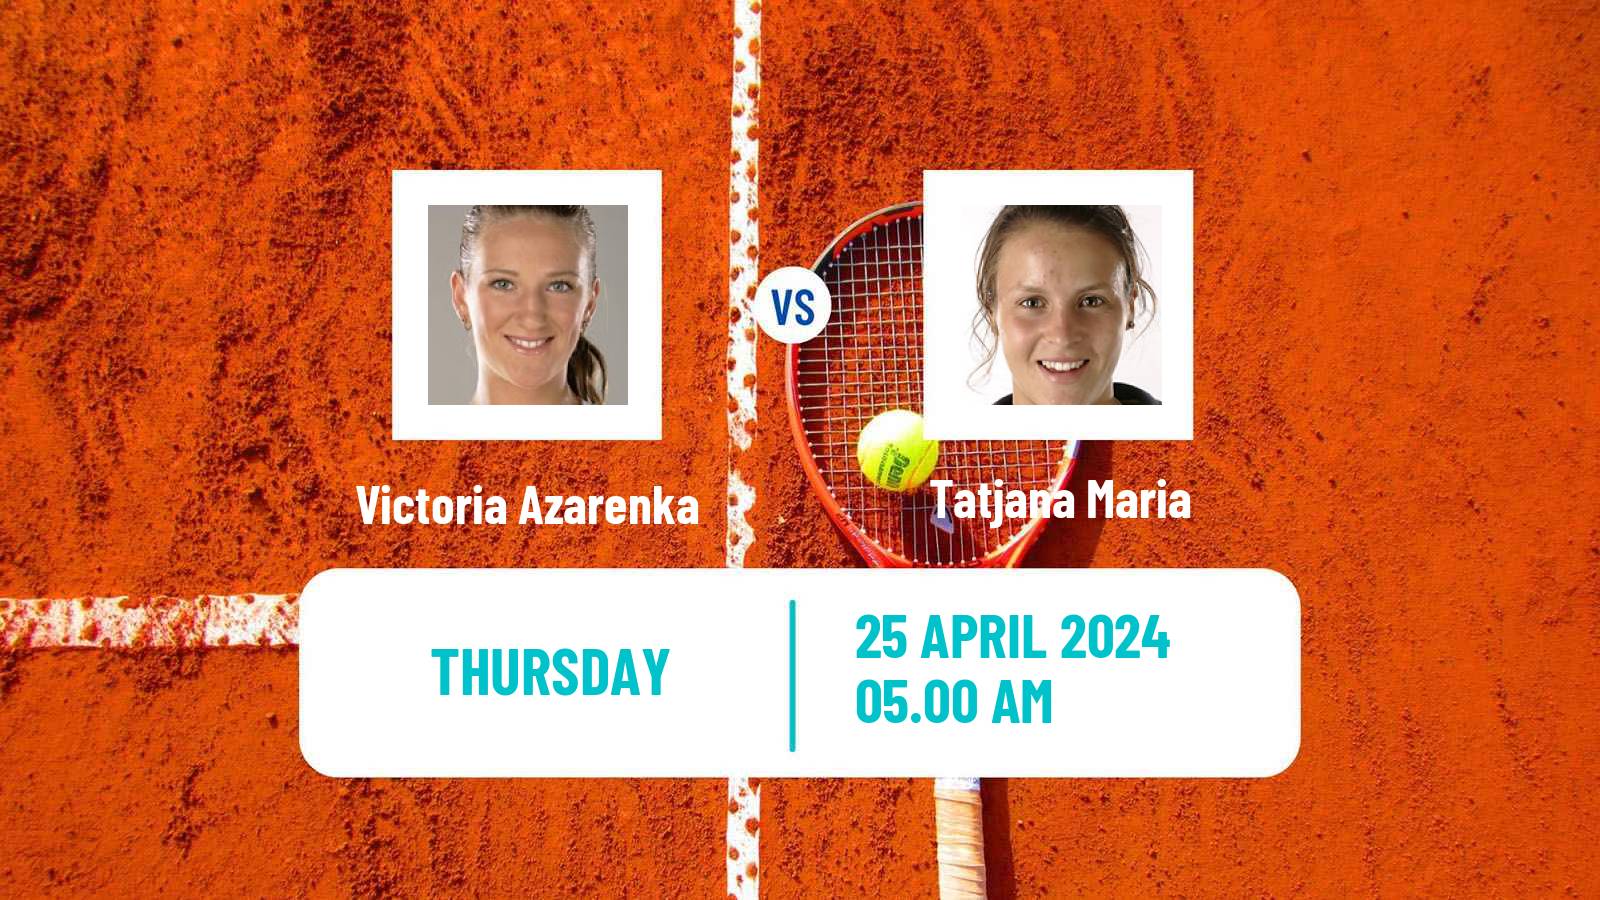 Tennis WTA Madrid Victoria Azarenka - Tatjana Maria